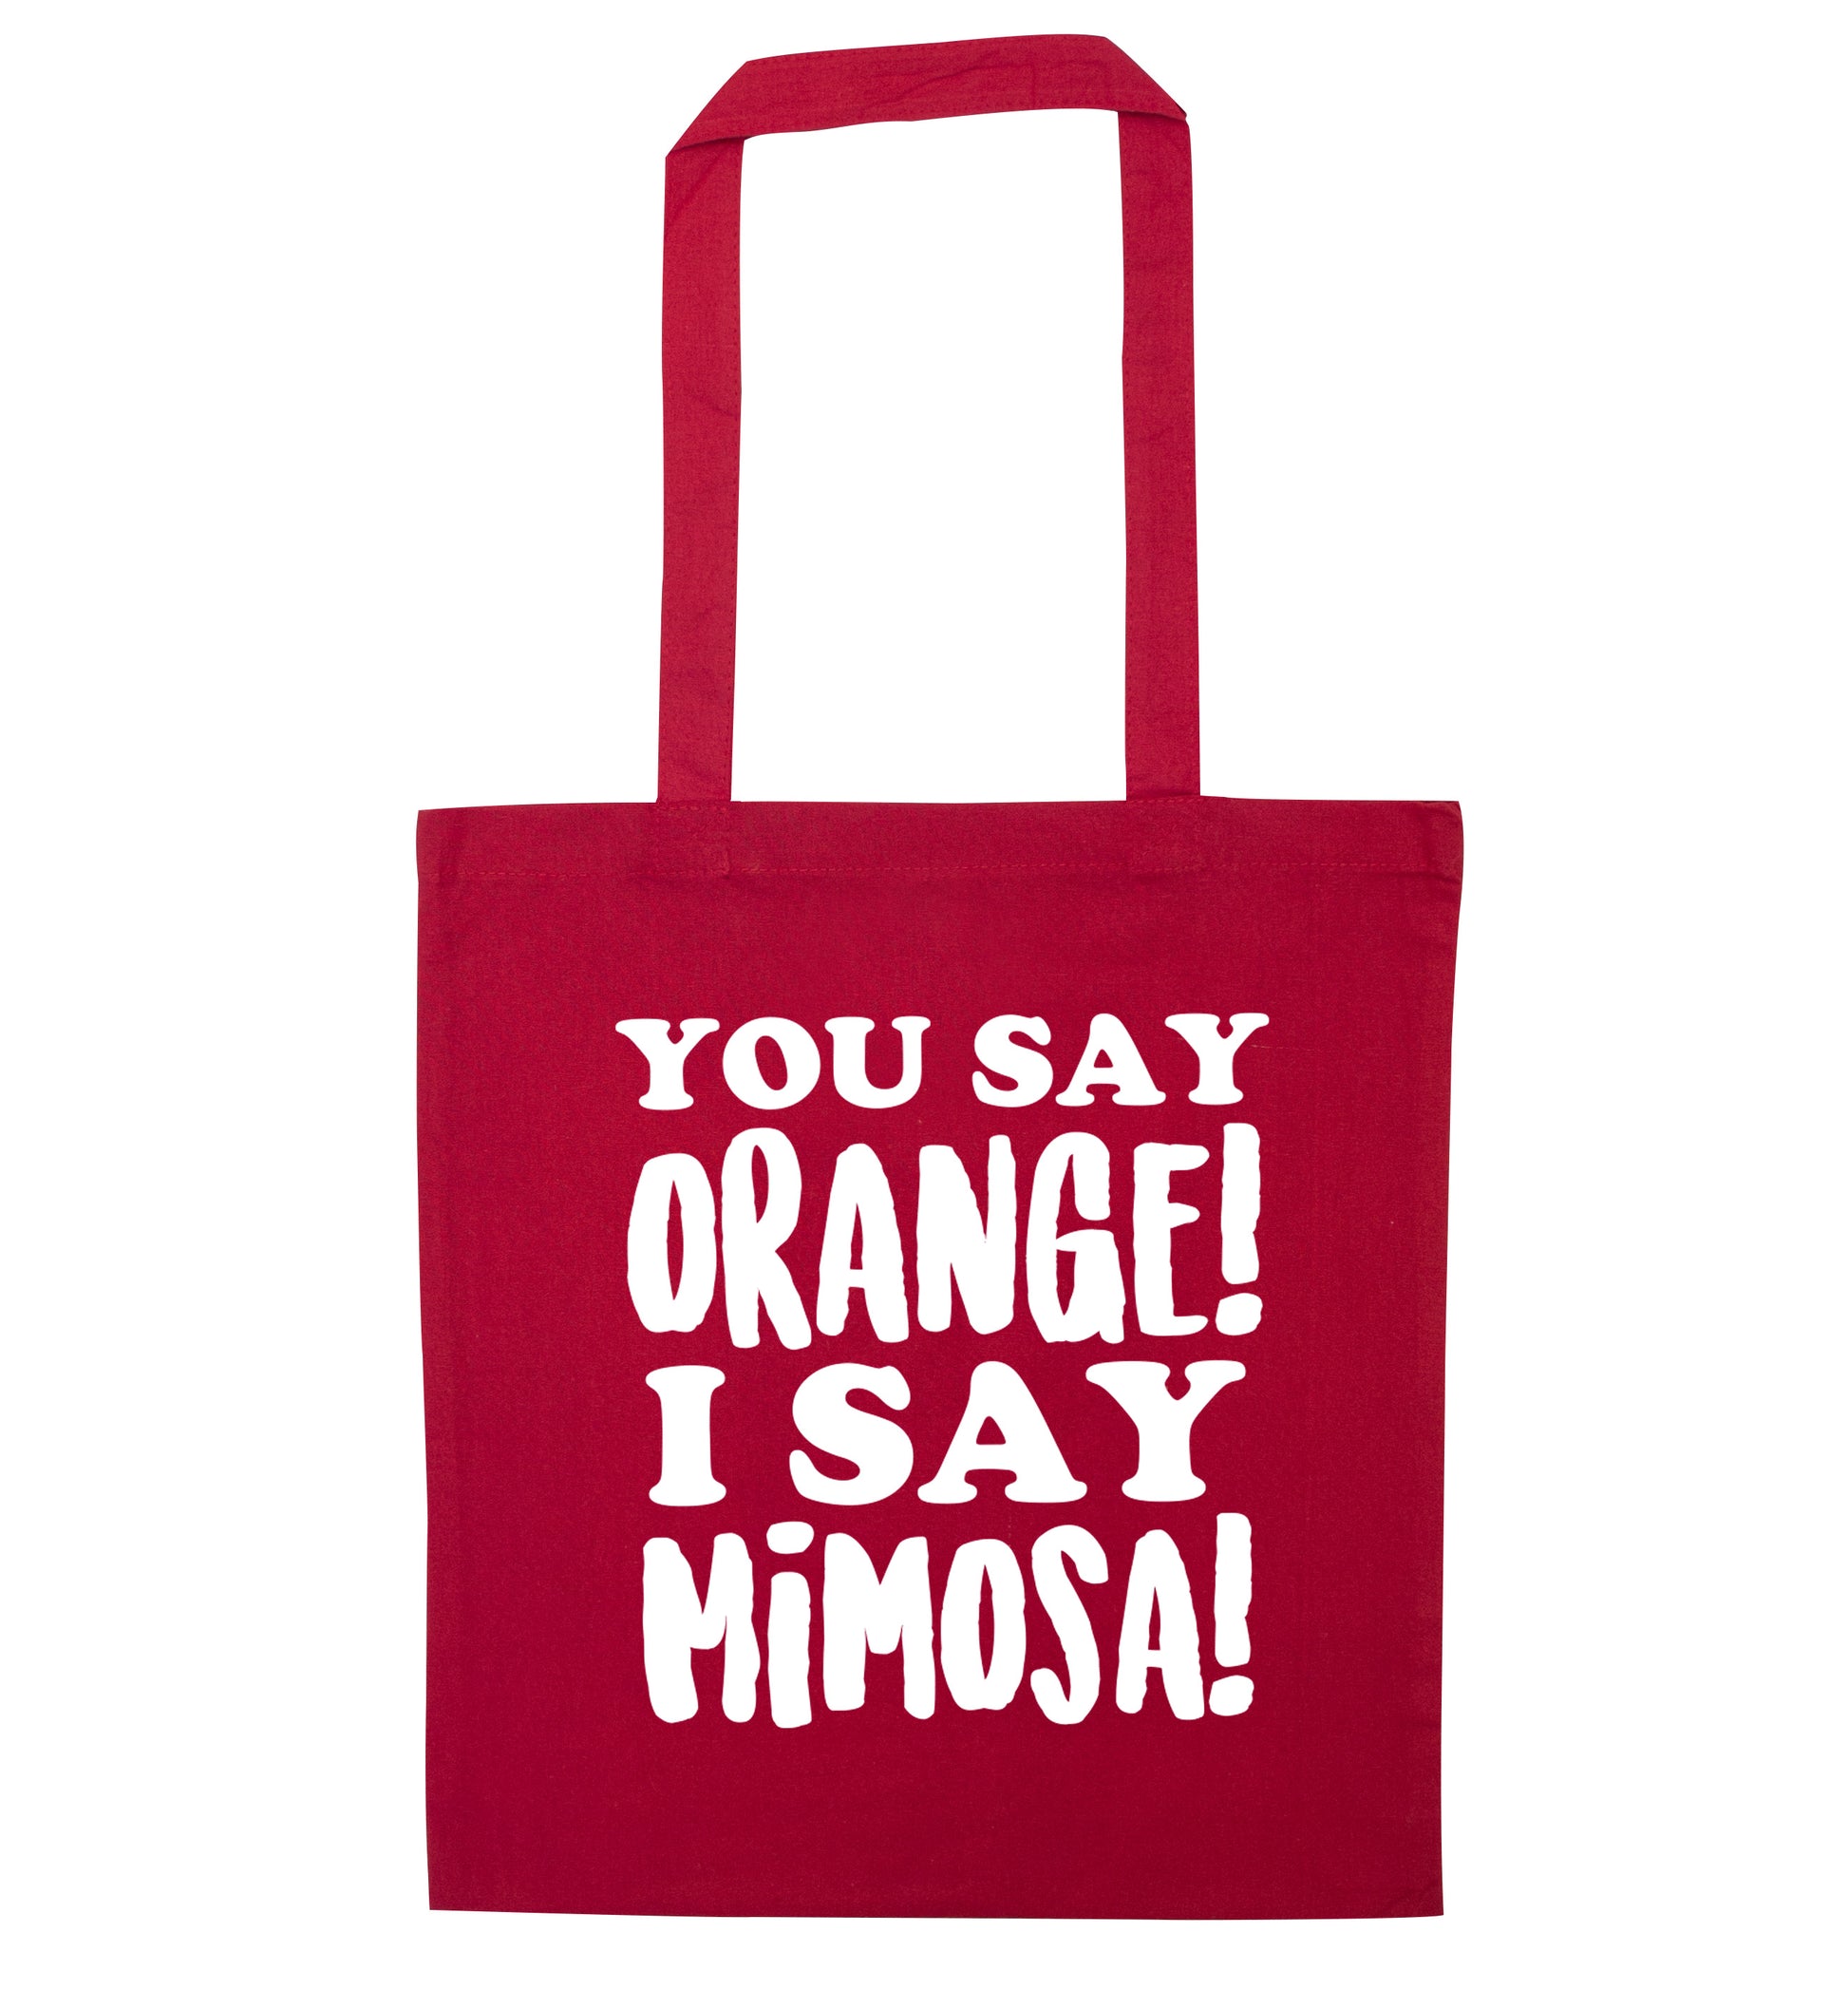 You say orange I say mimosa! red tote bag